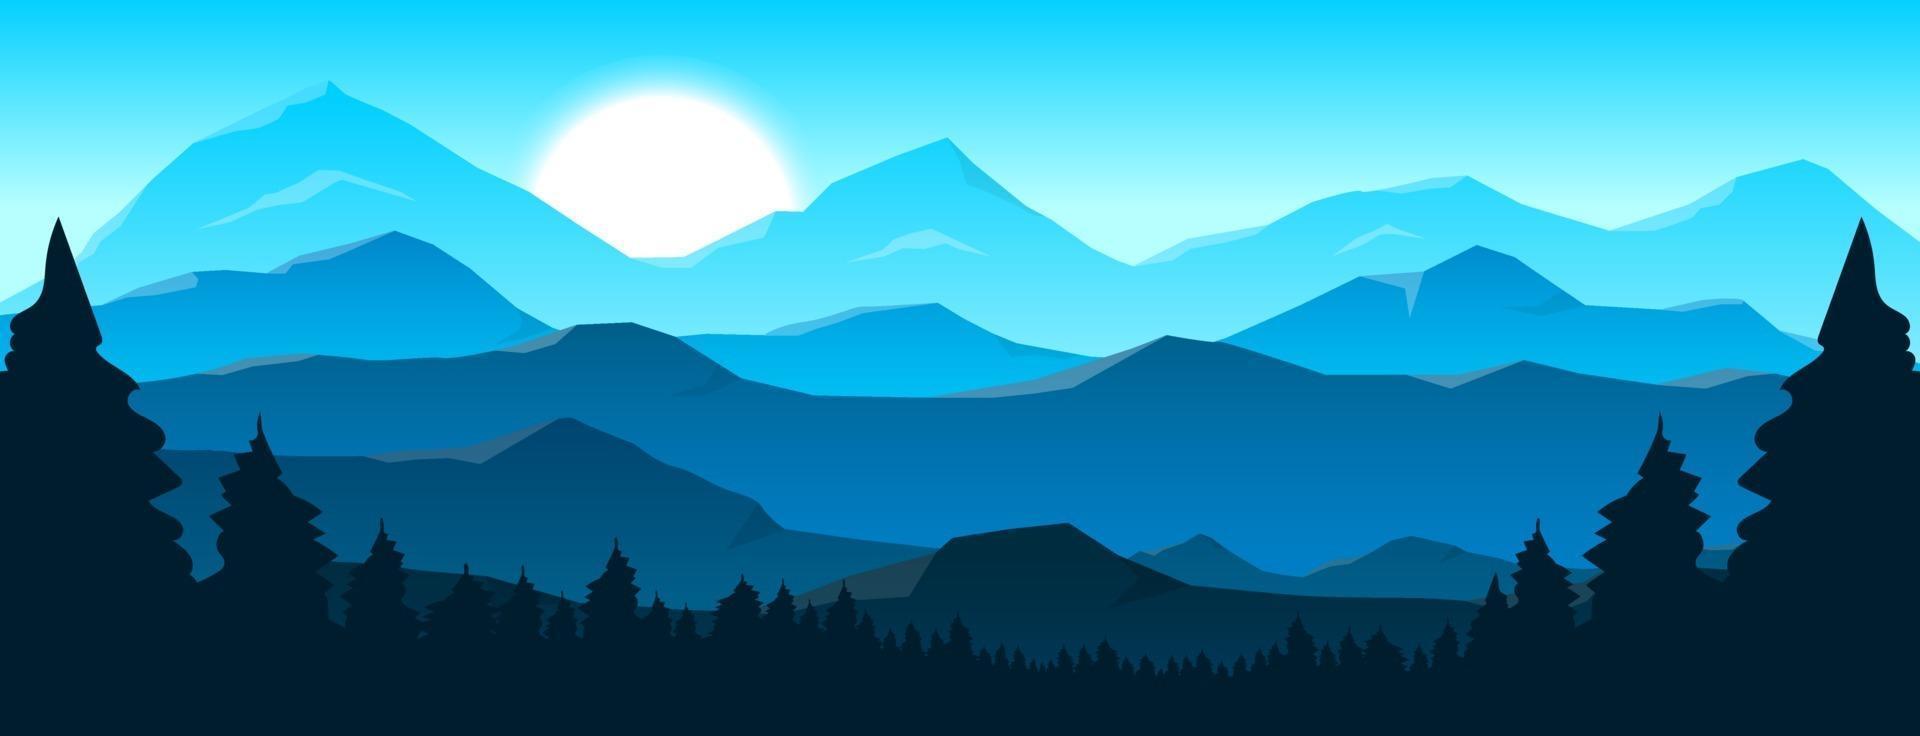 Berg schöne Landschaft Hintergrund Vektor-Design-Illustration vektor